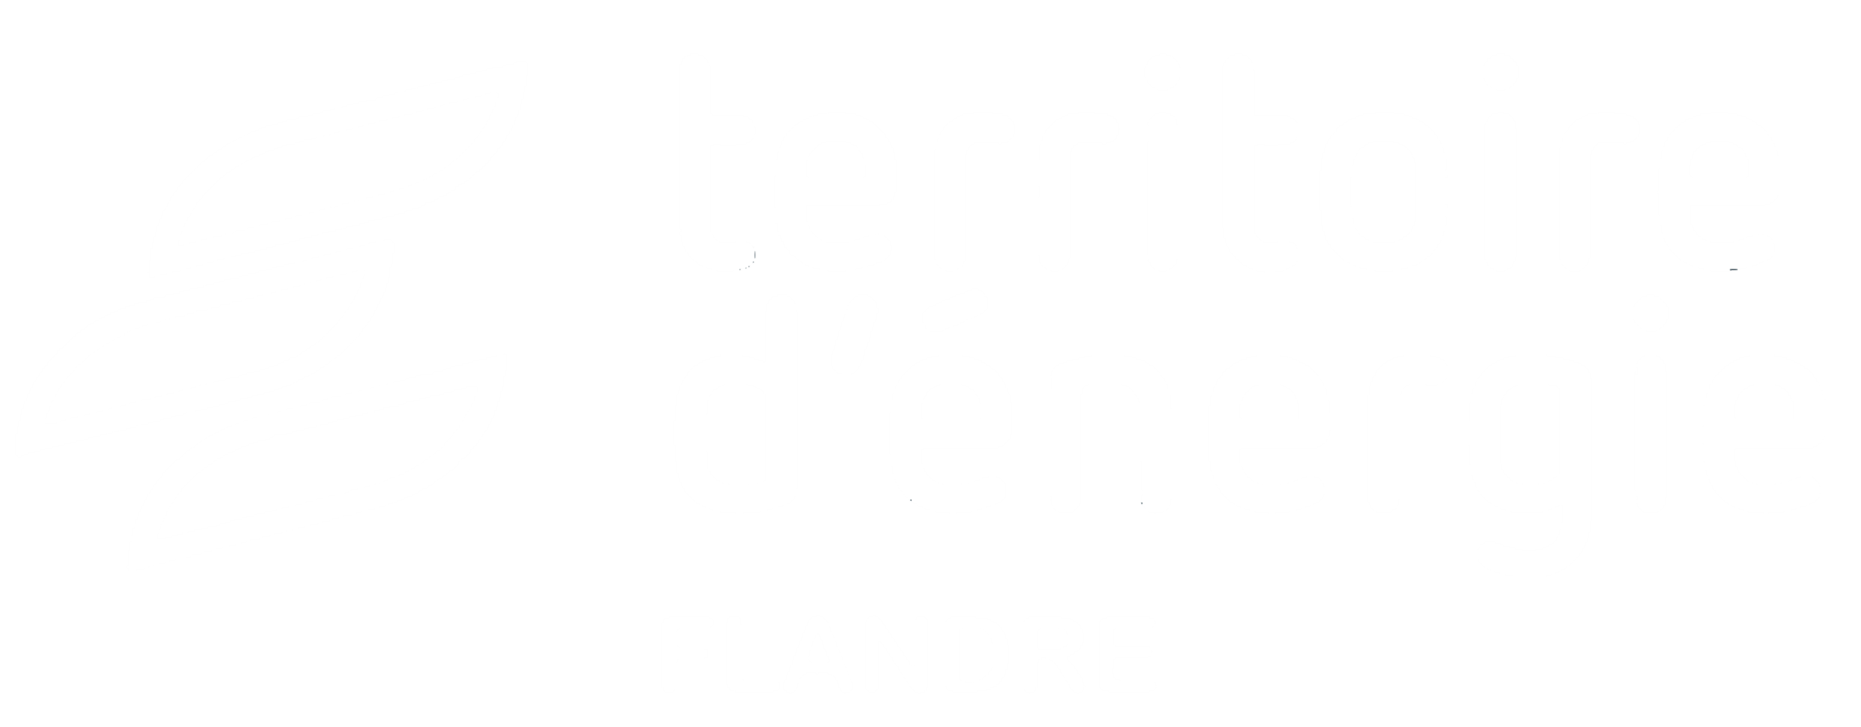 Territoire d'Energie Flandre